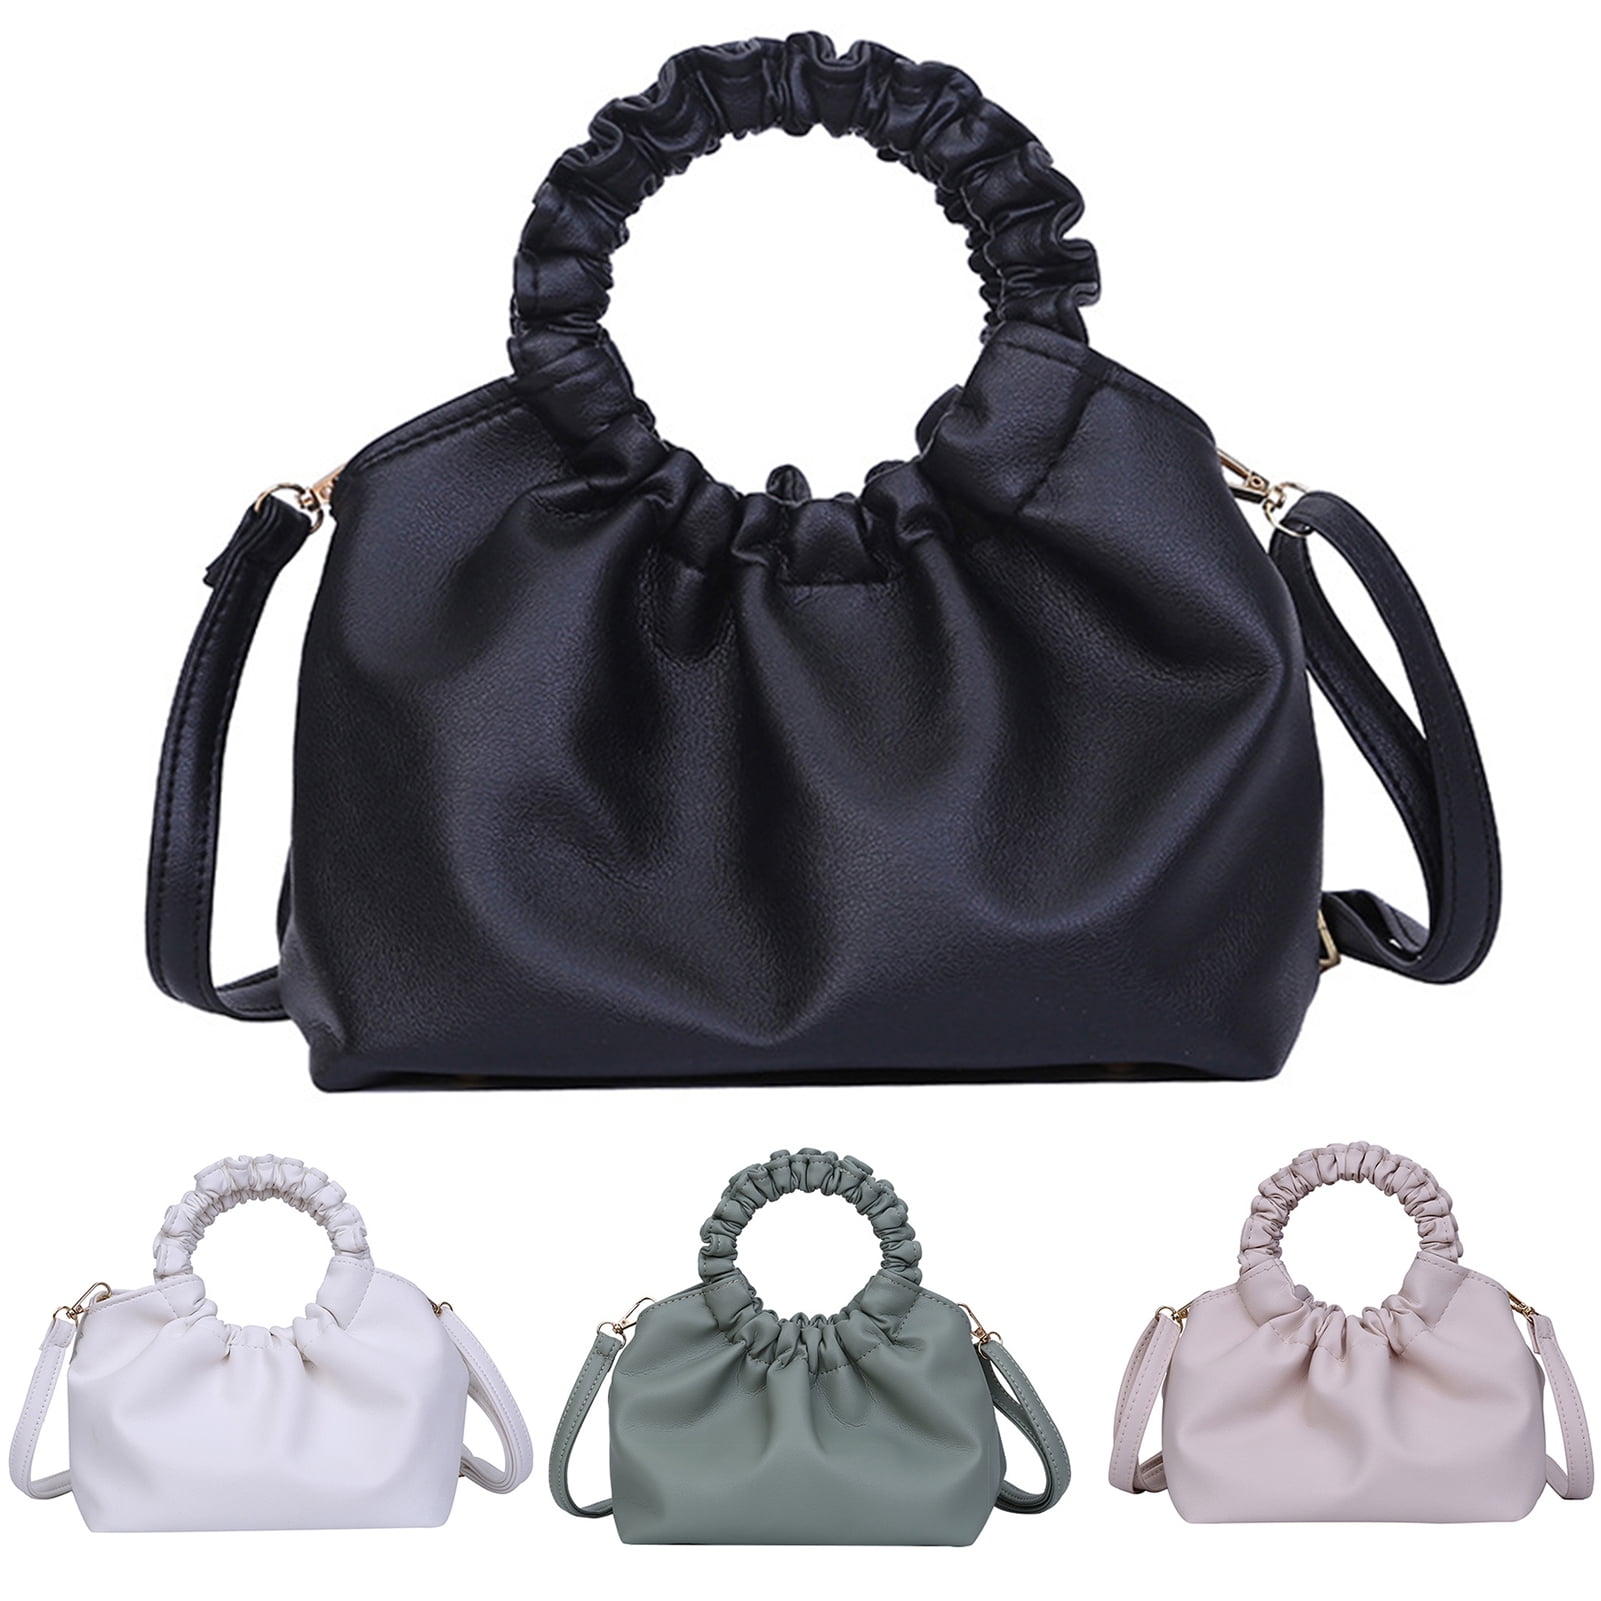 Spring Handbag Trends to Try - Cyndi Spivey